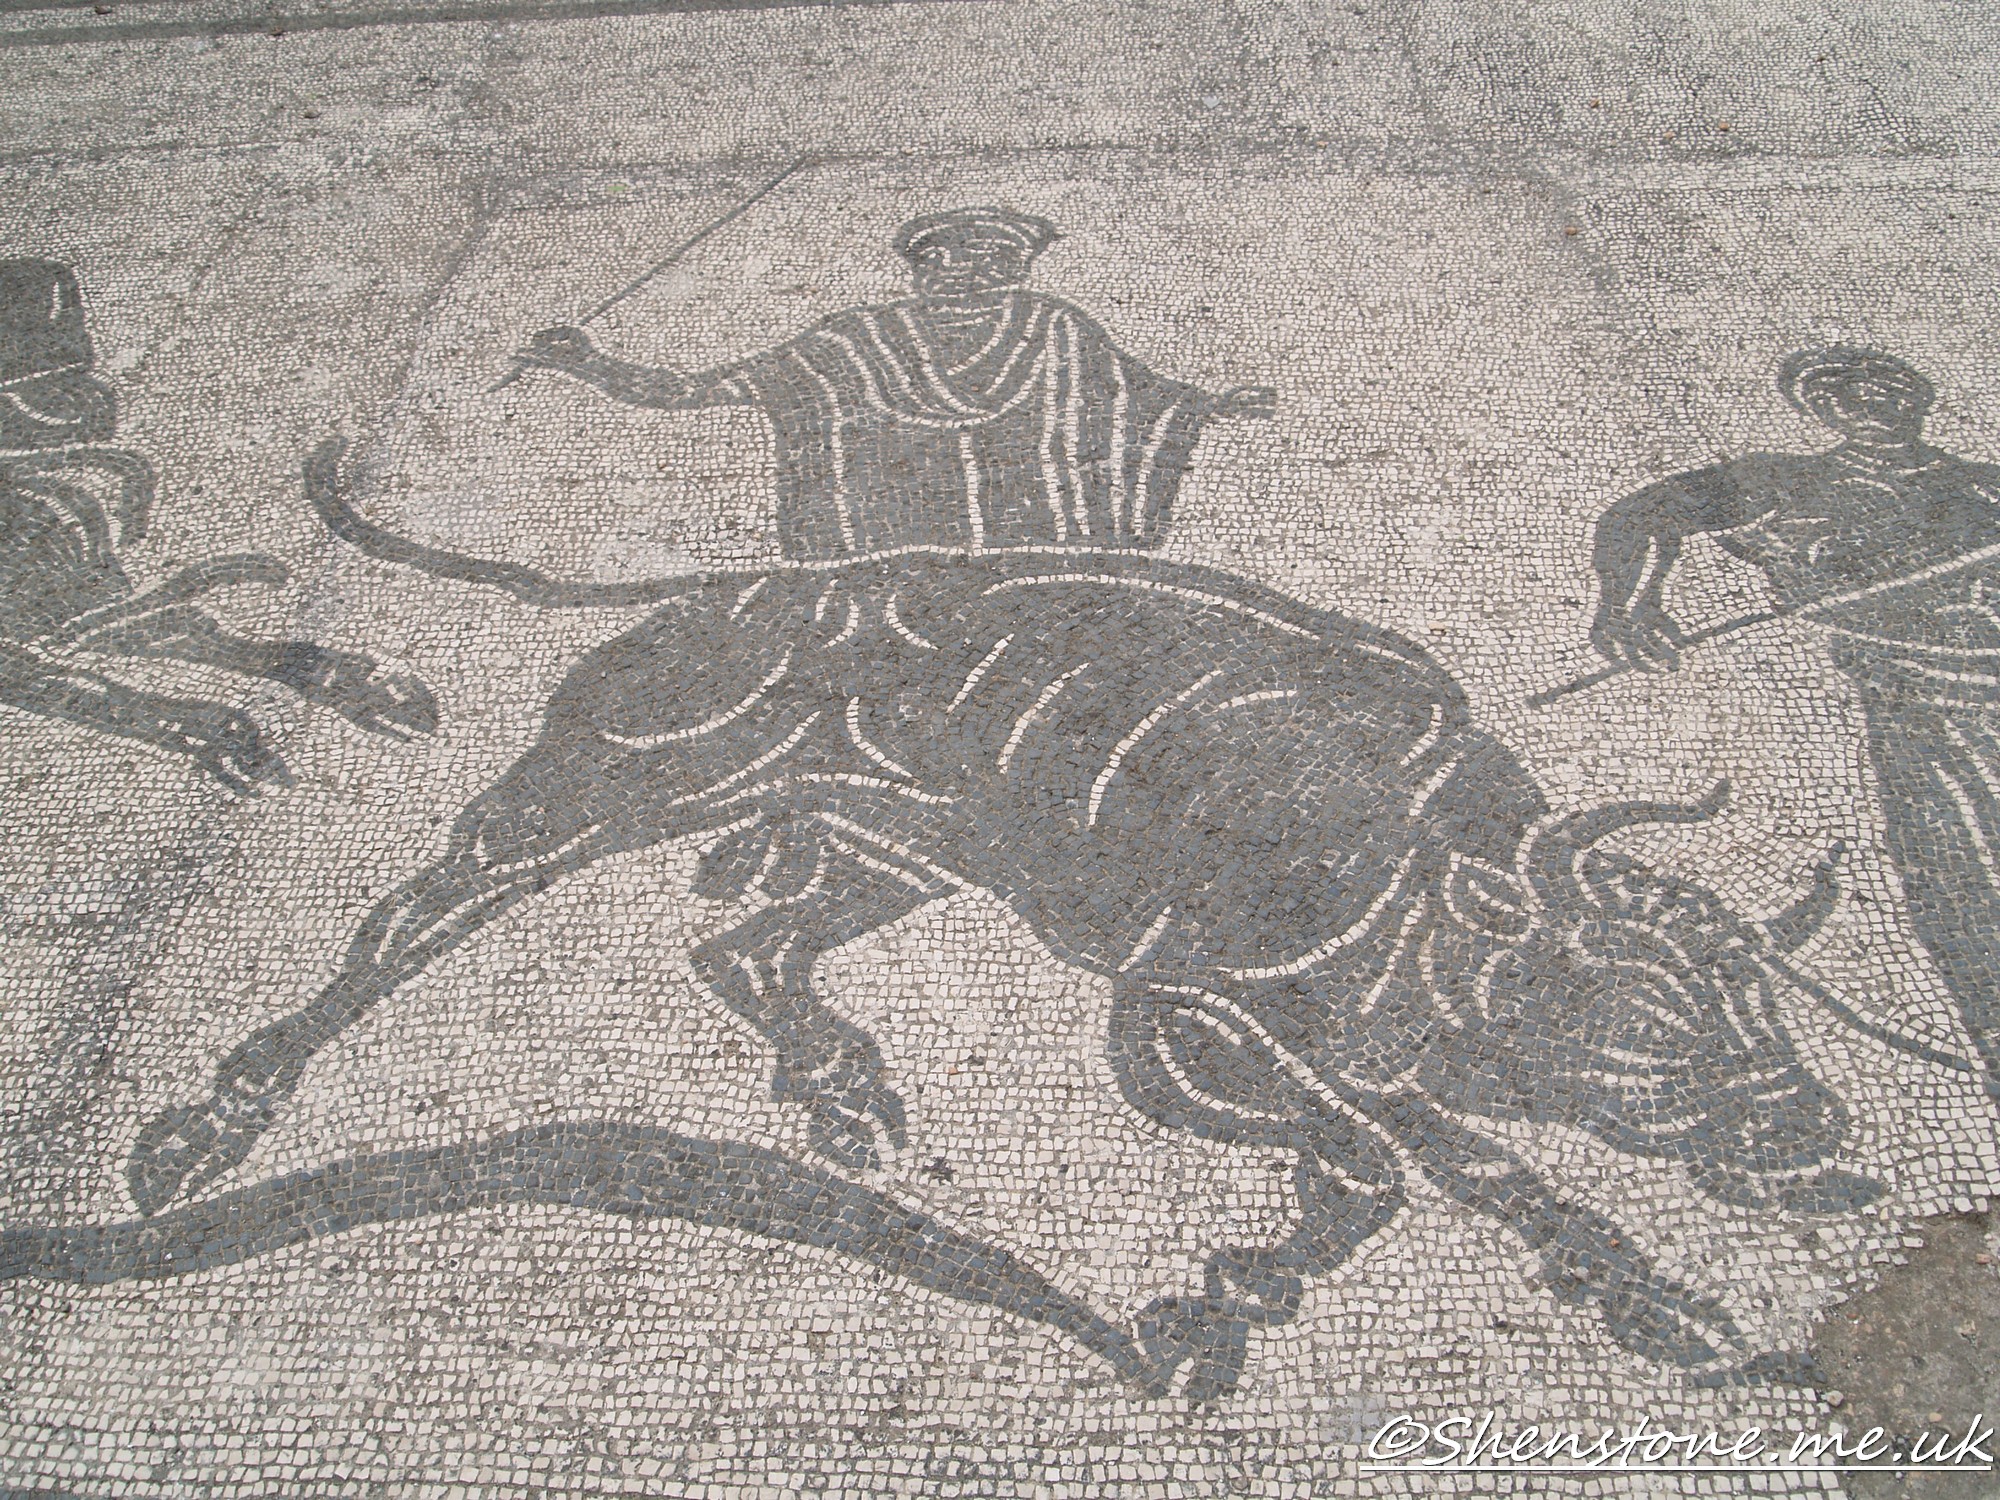 Mosaic bull, Ostia Antica, Italy